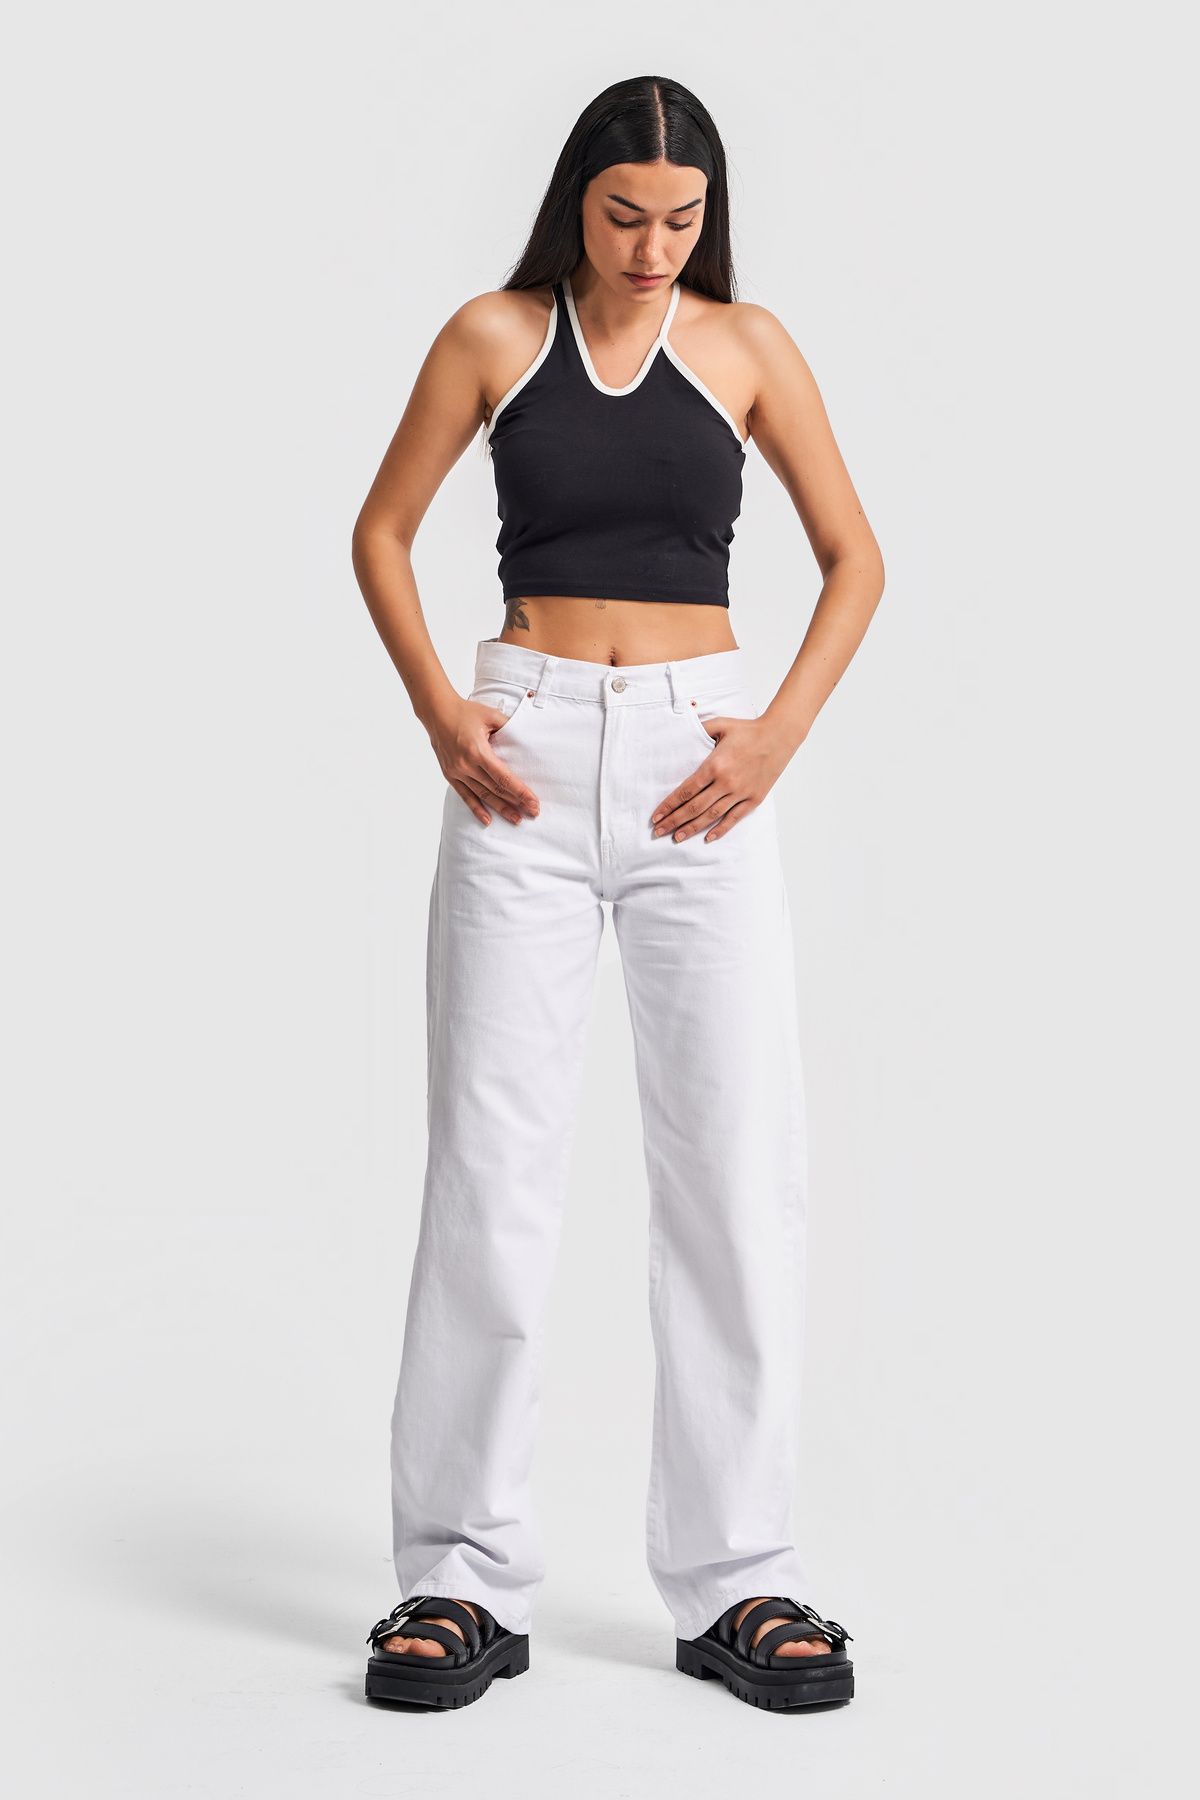 its basic Kadın Beyaz Renk Loose Fit Orta Bel Denim Pantolon